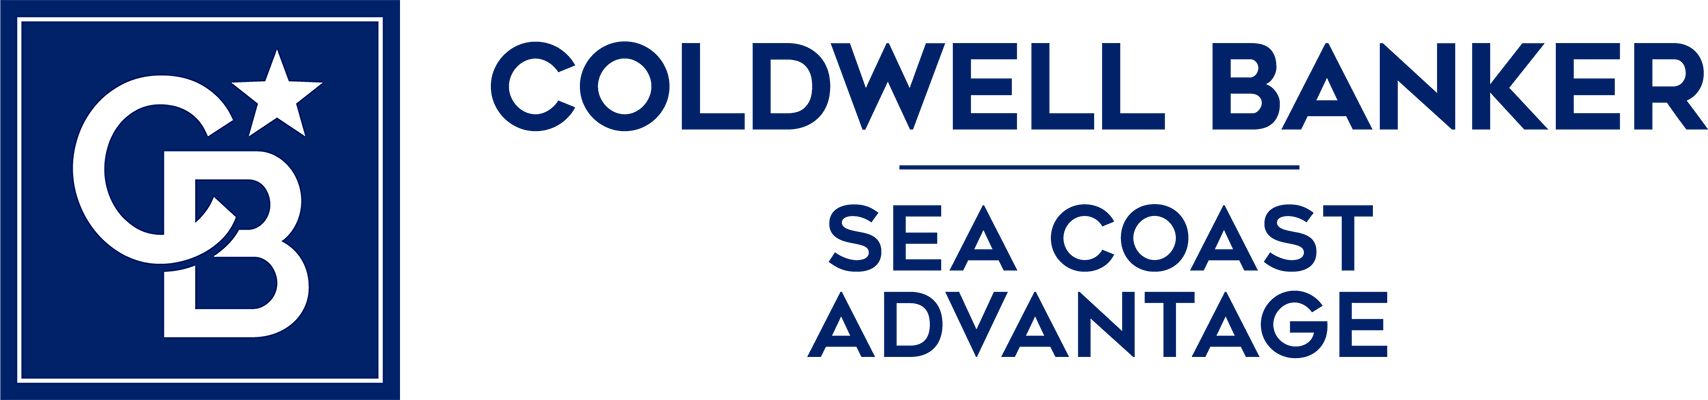 Chris Hanna - Coldwell Banker Sea Coast Advantage Logo